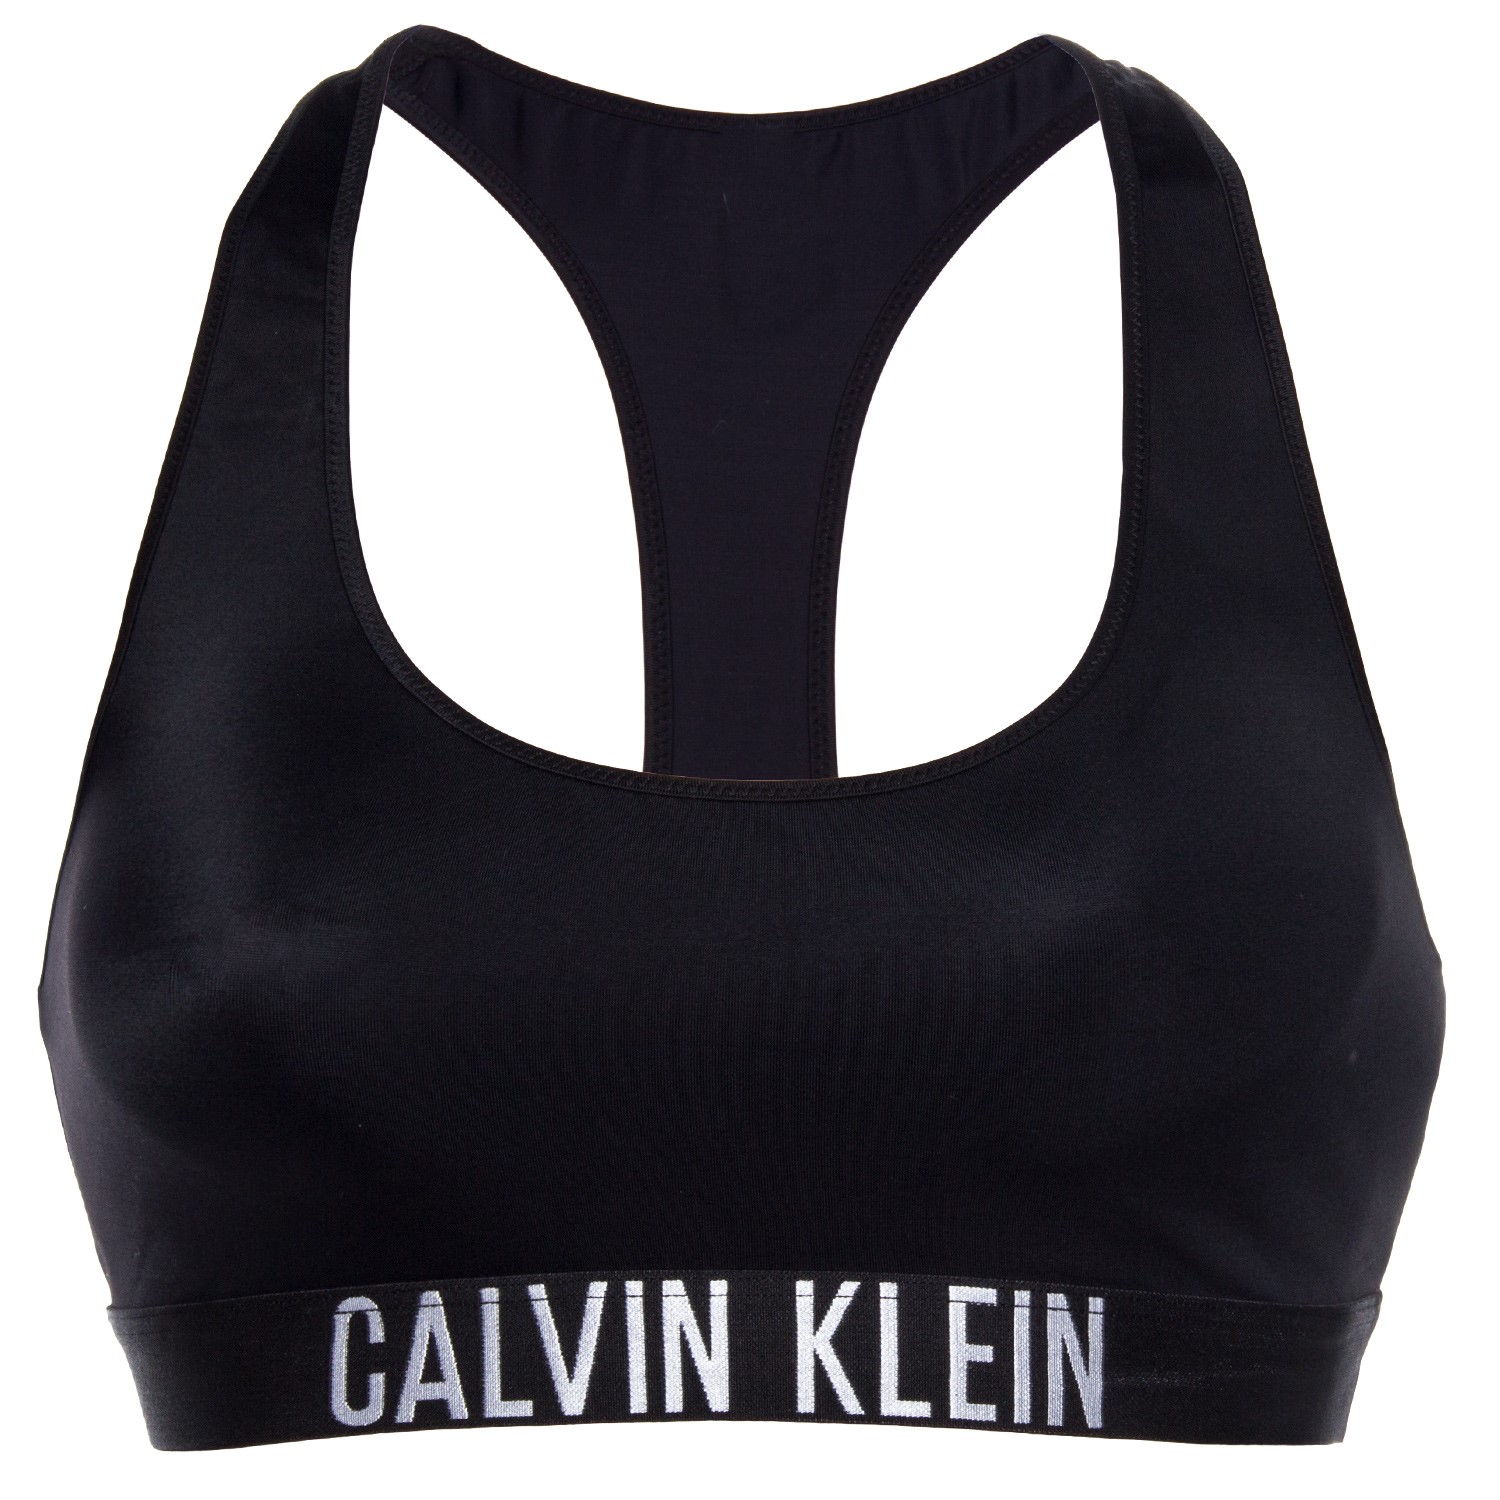 wereld reflecteren complexiteit Calvin Klein Intense Power Racerback Bikini Top - Topjes - Bikini's -  Zwemkleding - Timarco.nl